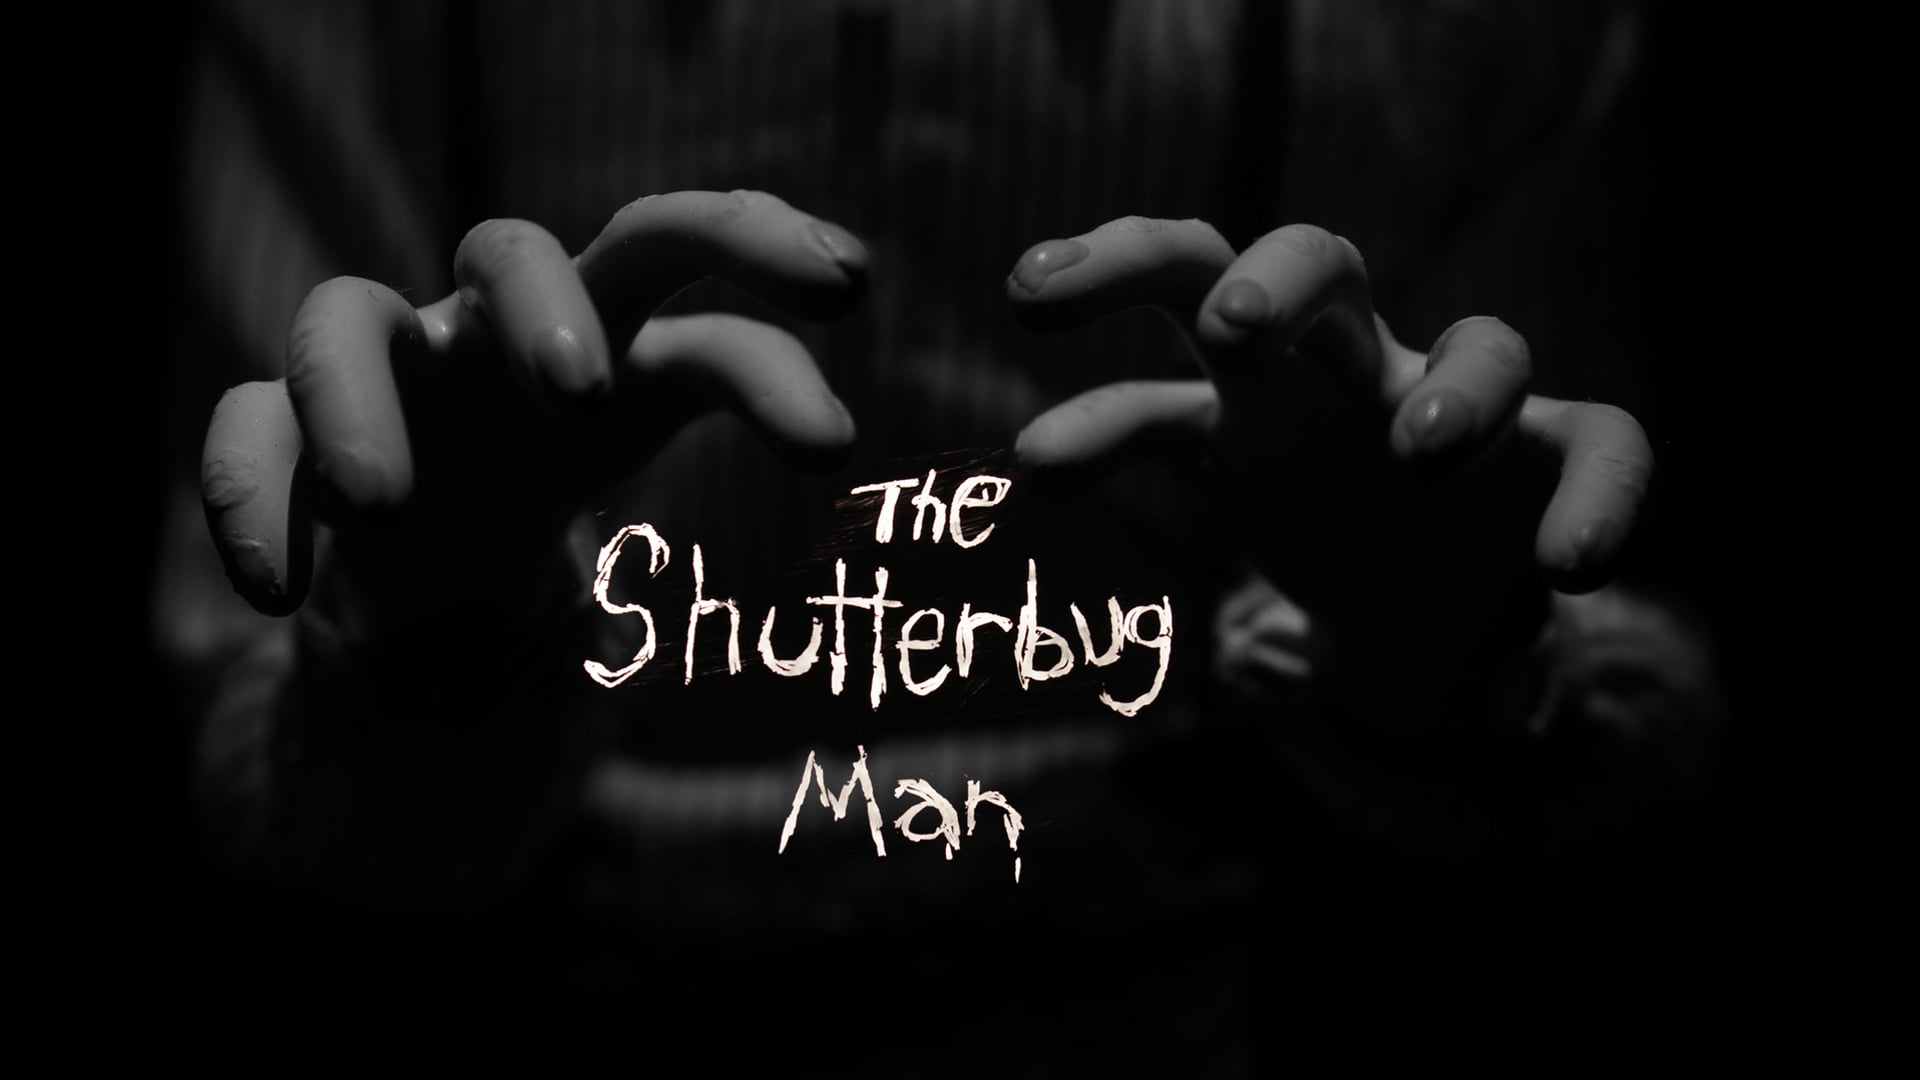 THE SHUTTERBUG MAN